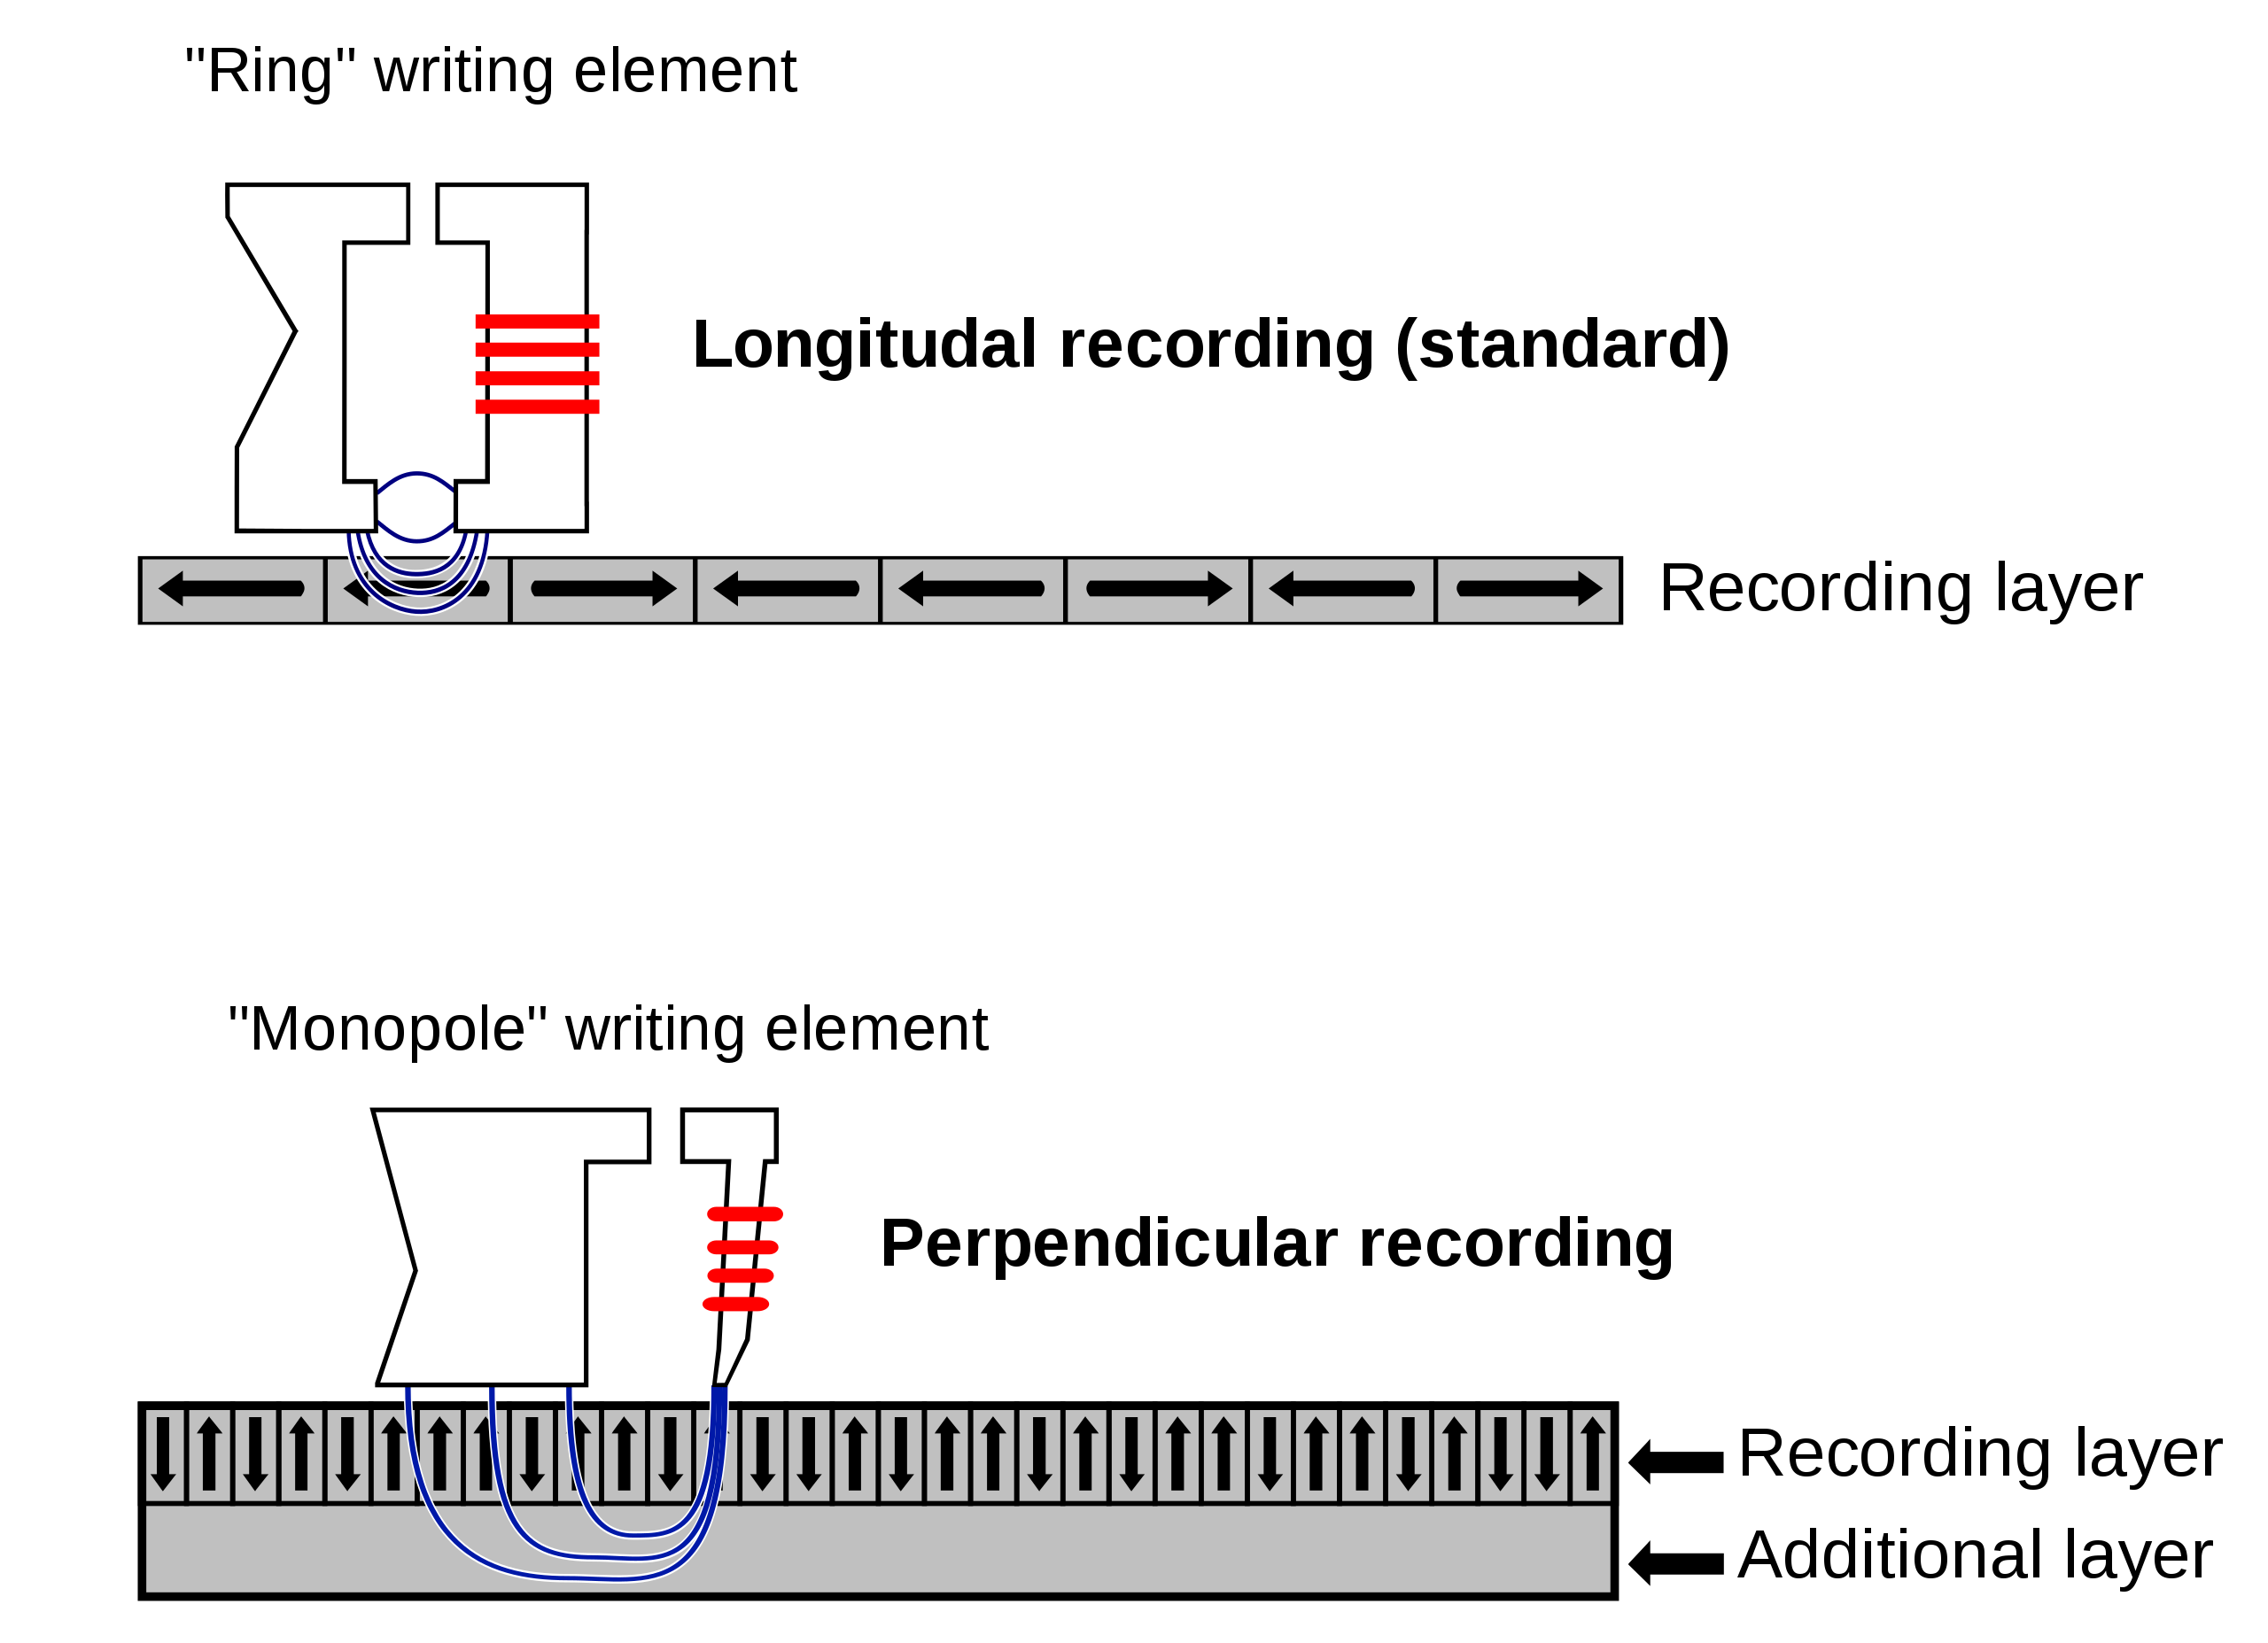 Longitudinal recording (standard) & perpendicular recording diagram